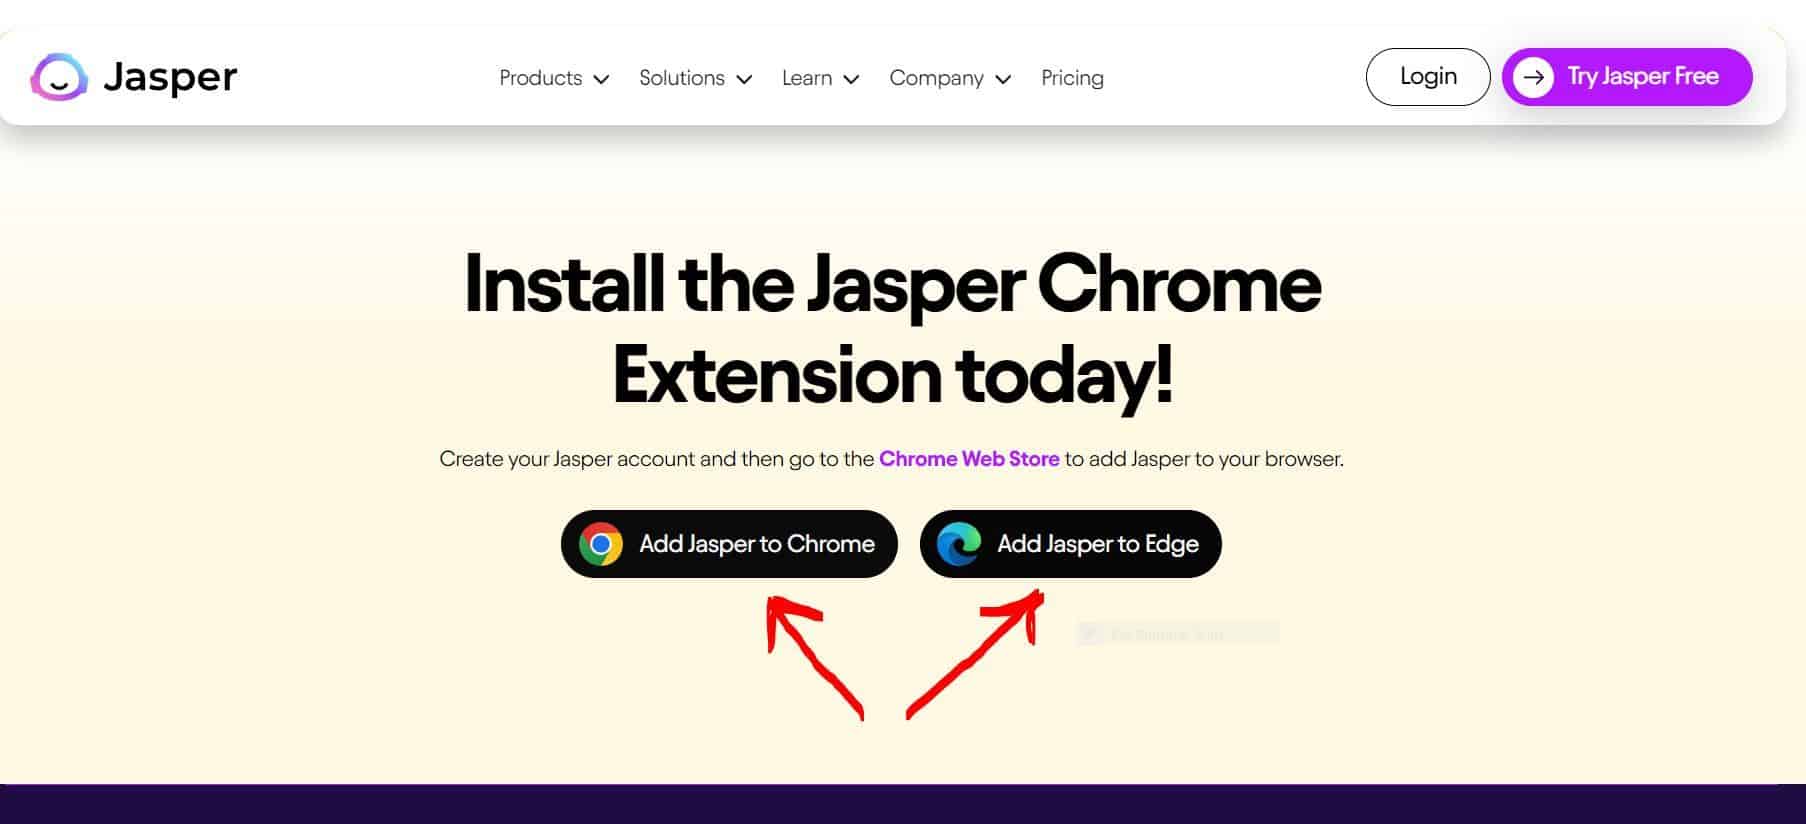 Jasper chrome extension